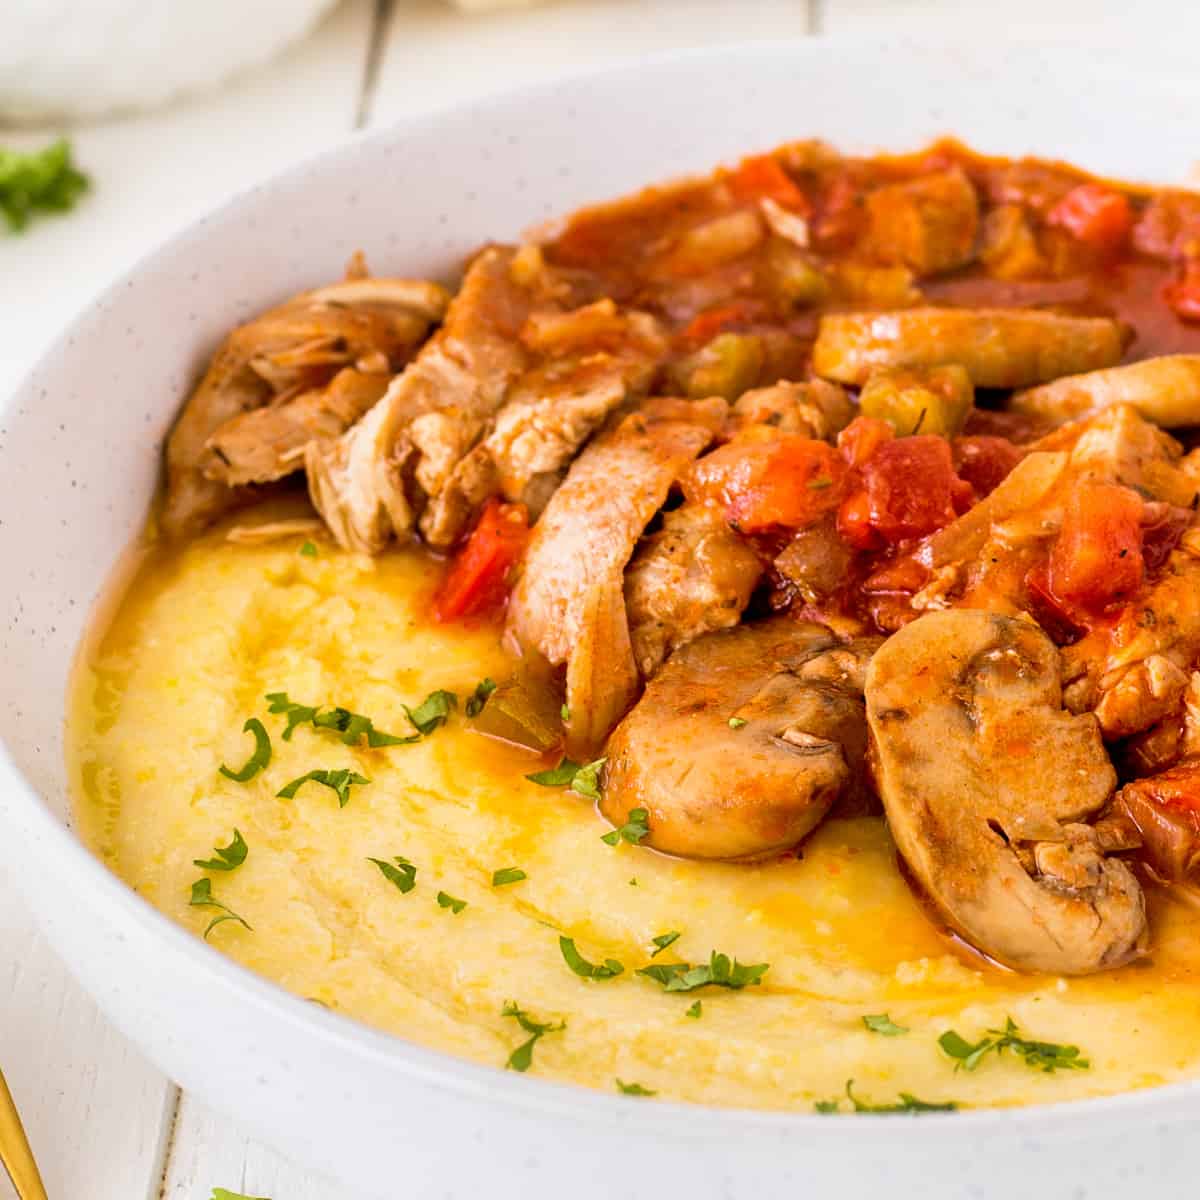 Chicken Cacciatore with polenta in a bowl